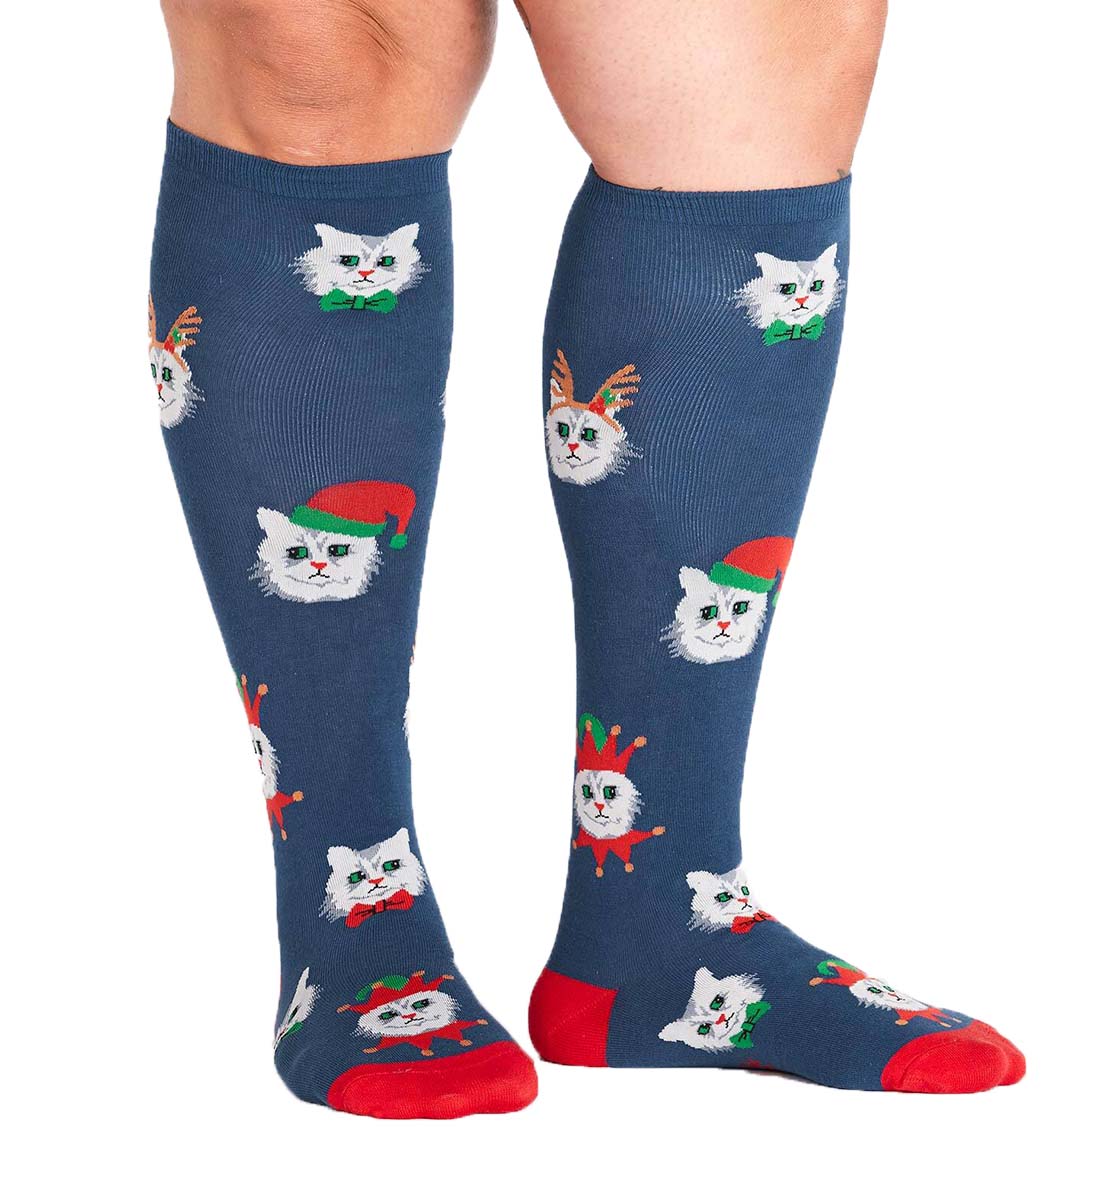 SOCK it to me Unisex Stretch-It Knee High Socks (s0068),Santa Claws - Santa Claws,One Size